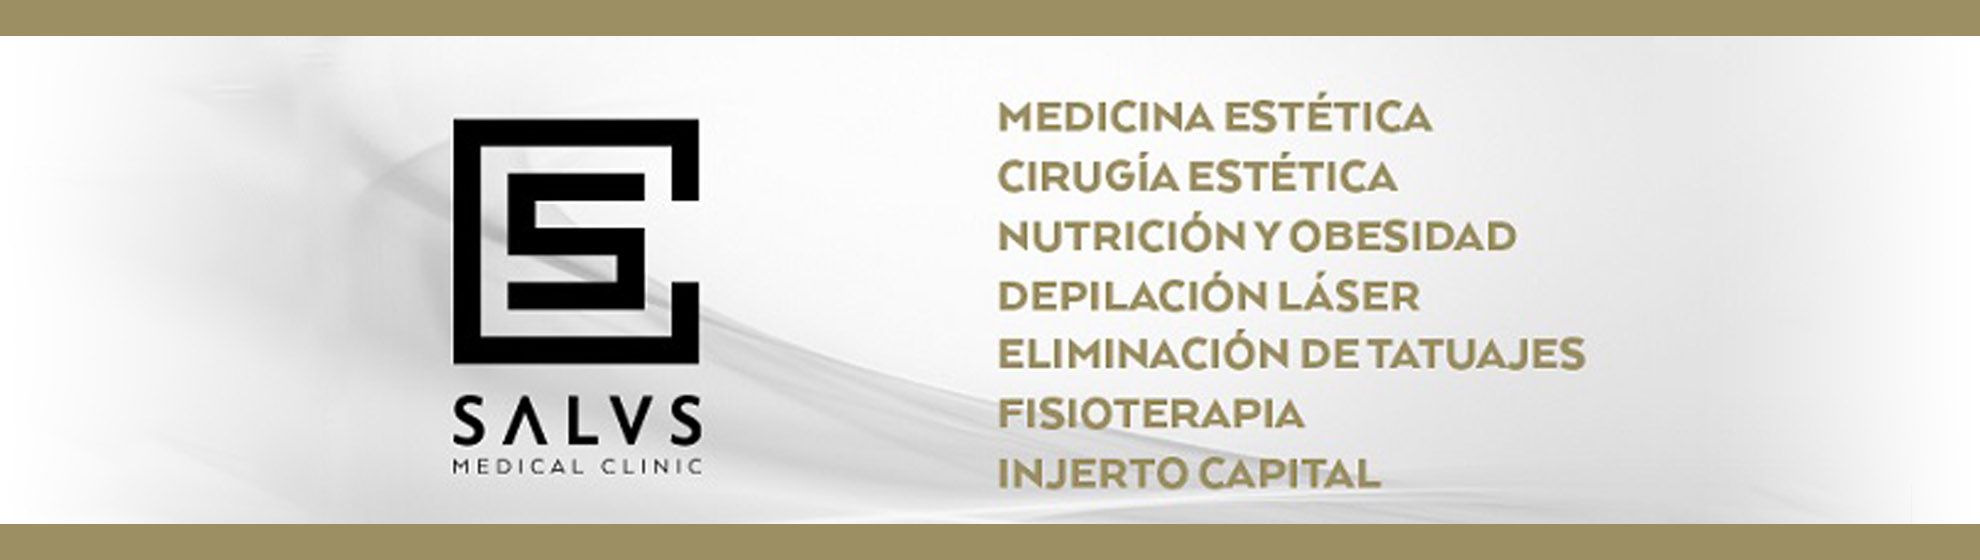 Salus Medical Clinic Granada